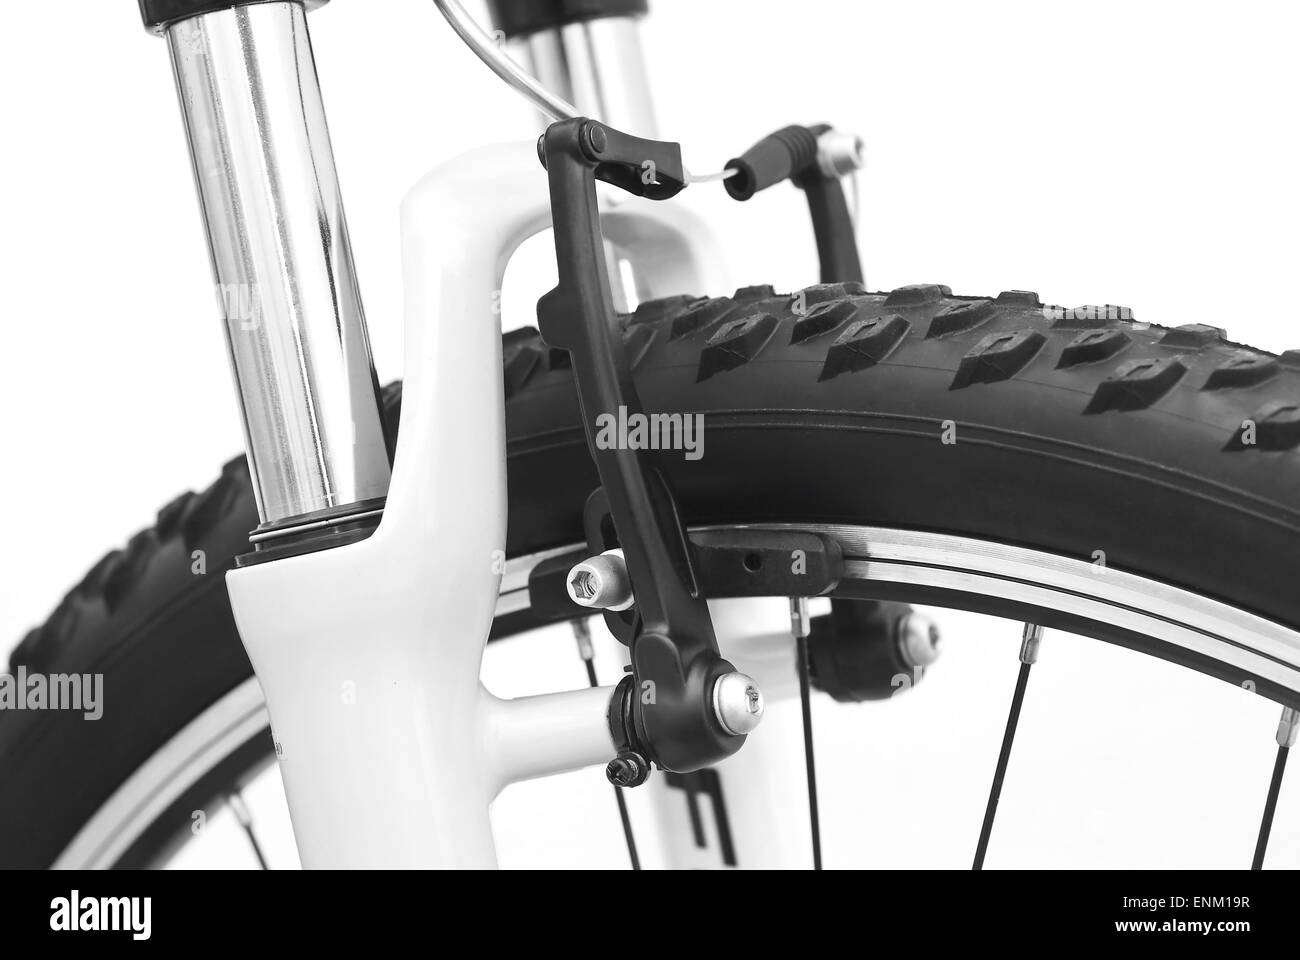 Bicicleta v detalle del freno delantero Fotografía de stock - Alamy